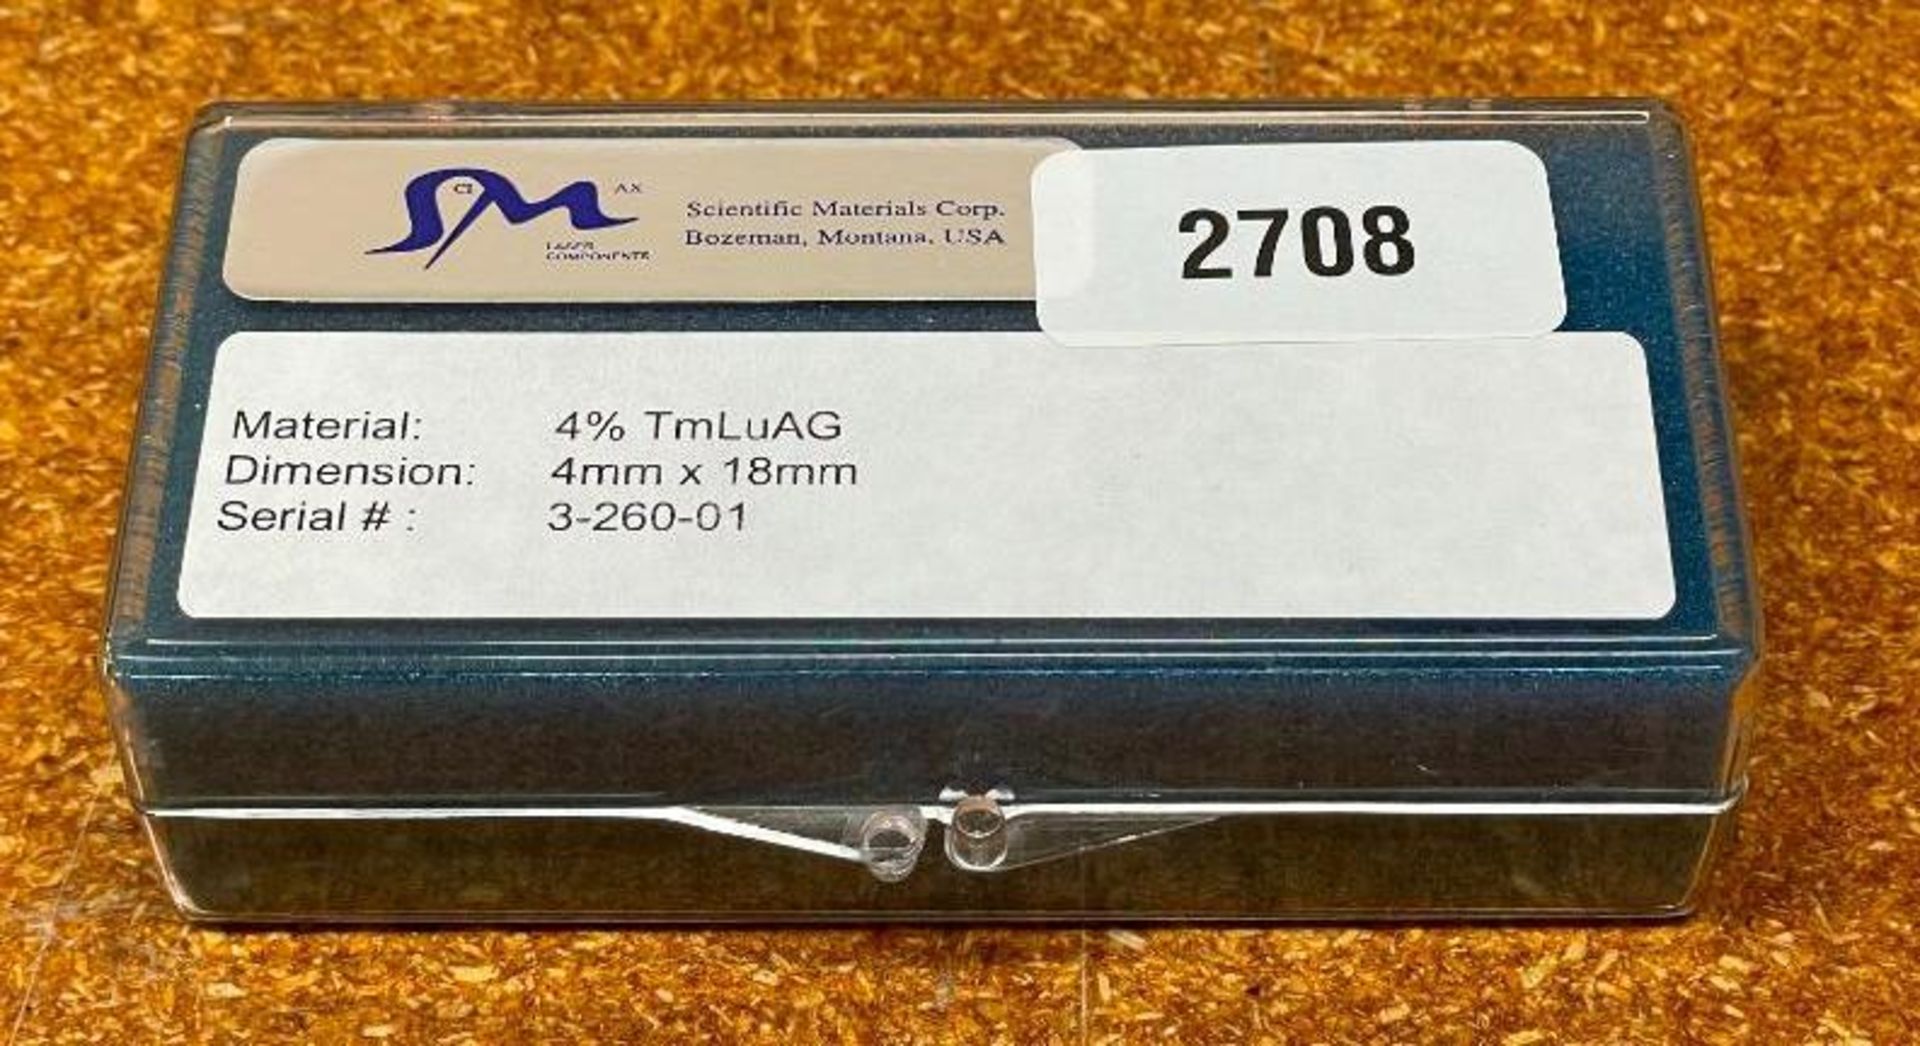 Tm:LuAG LASER ROD BRAND/MODEL: SCIENTIFIC MATERIALS INFORMATION: 4% Tm, 4X18mm QTY: 1 - Image 2 of 2